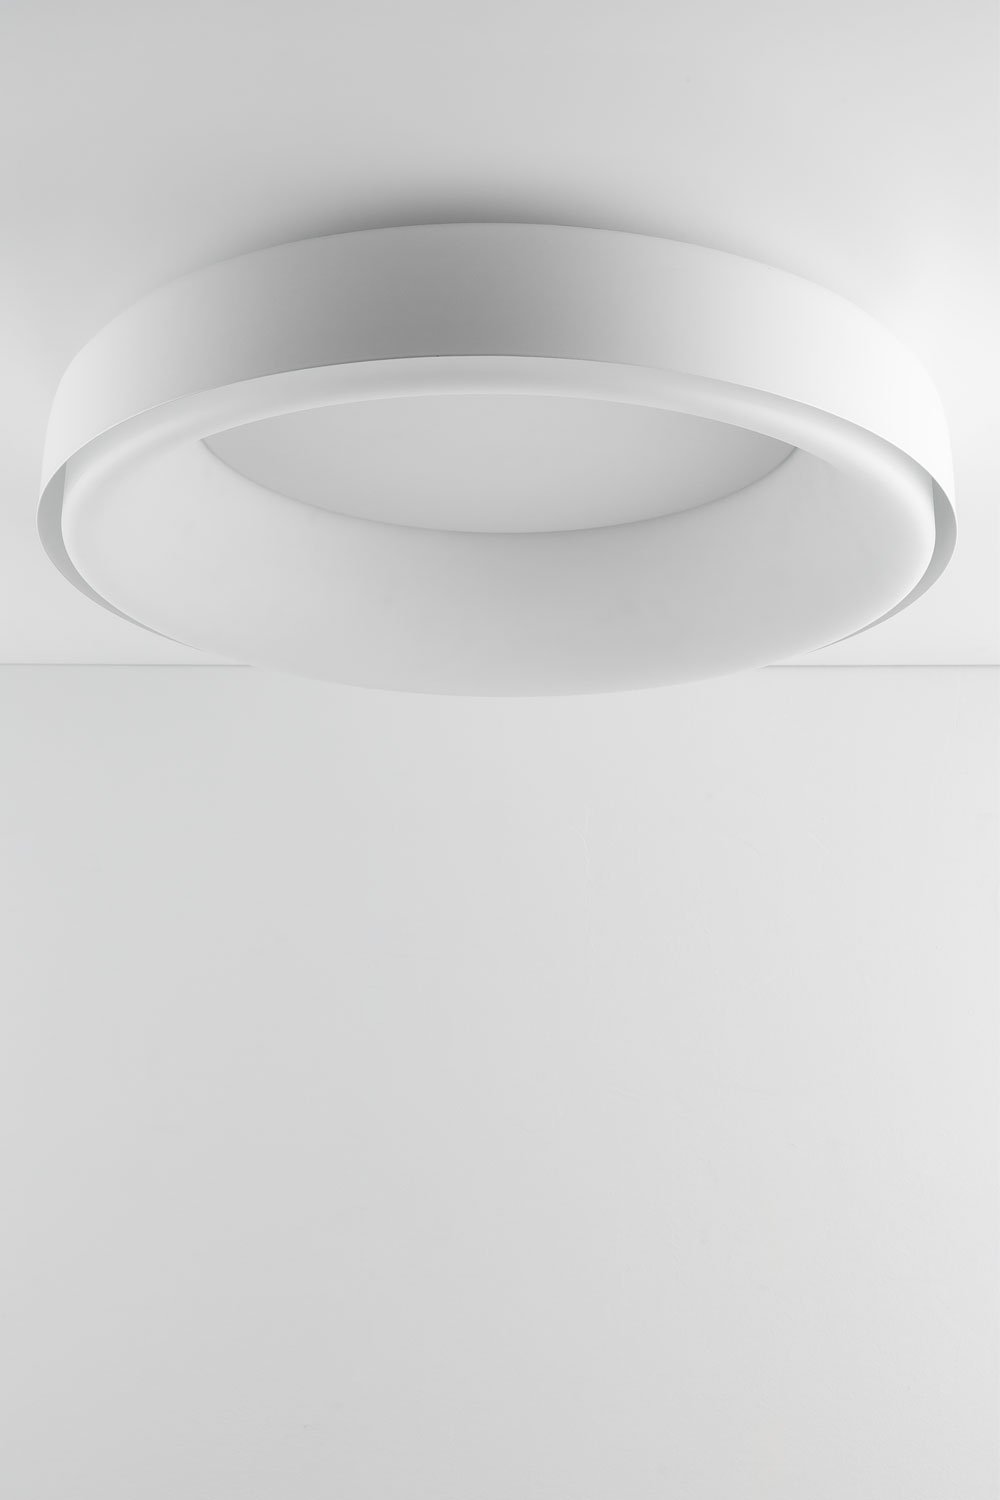 Ramize Metalen LED-plafondlamp , galerij beeld 1